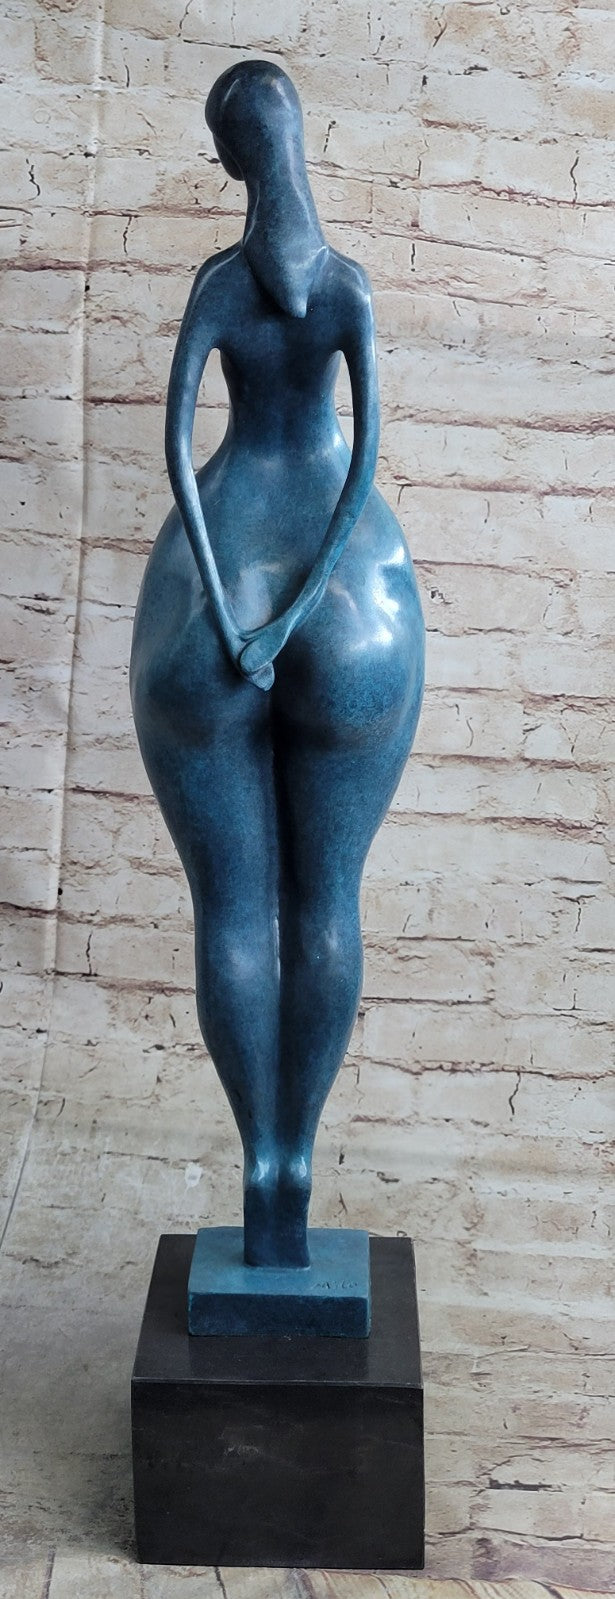 Contemporary Art - Voluminous Erotic Nude - Signed Miguel Lopez - Limited Artwork